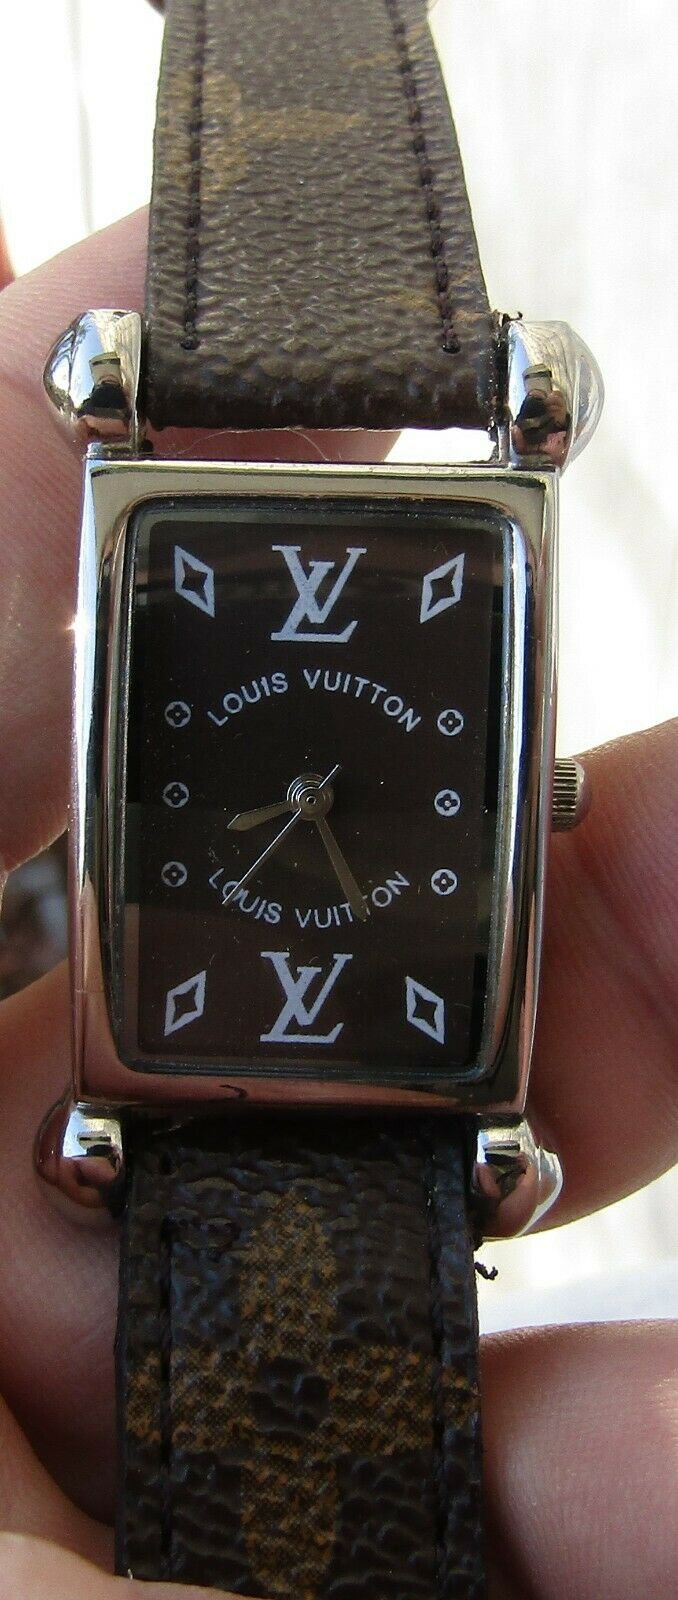 Ladies Watch estate dial & brown LV band Louis Vuitton # 1187HS2003L new  battery